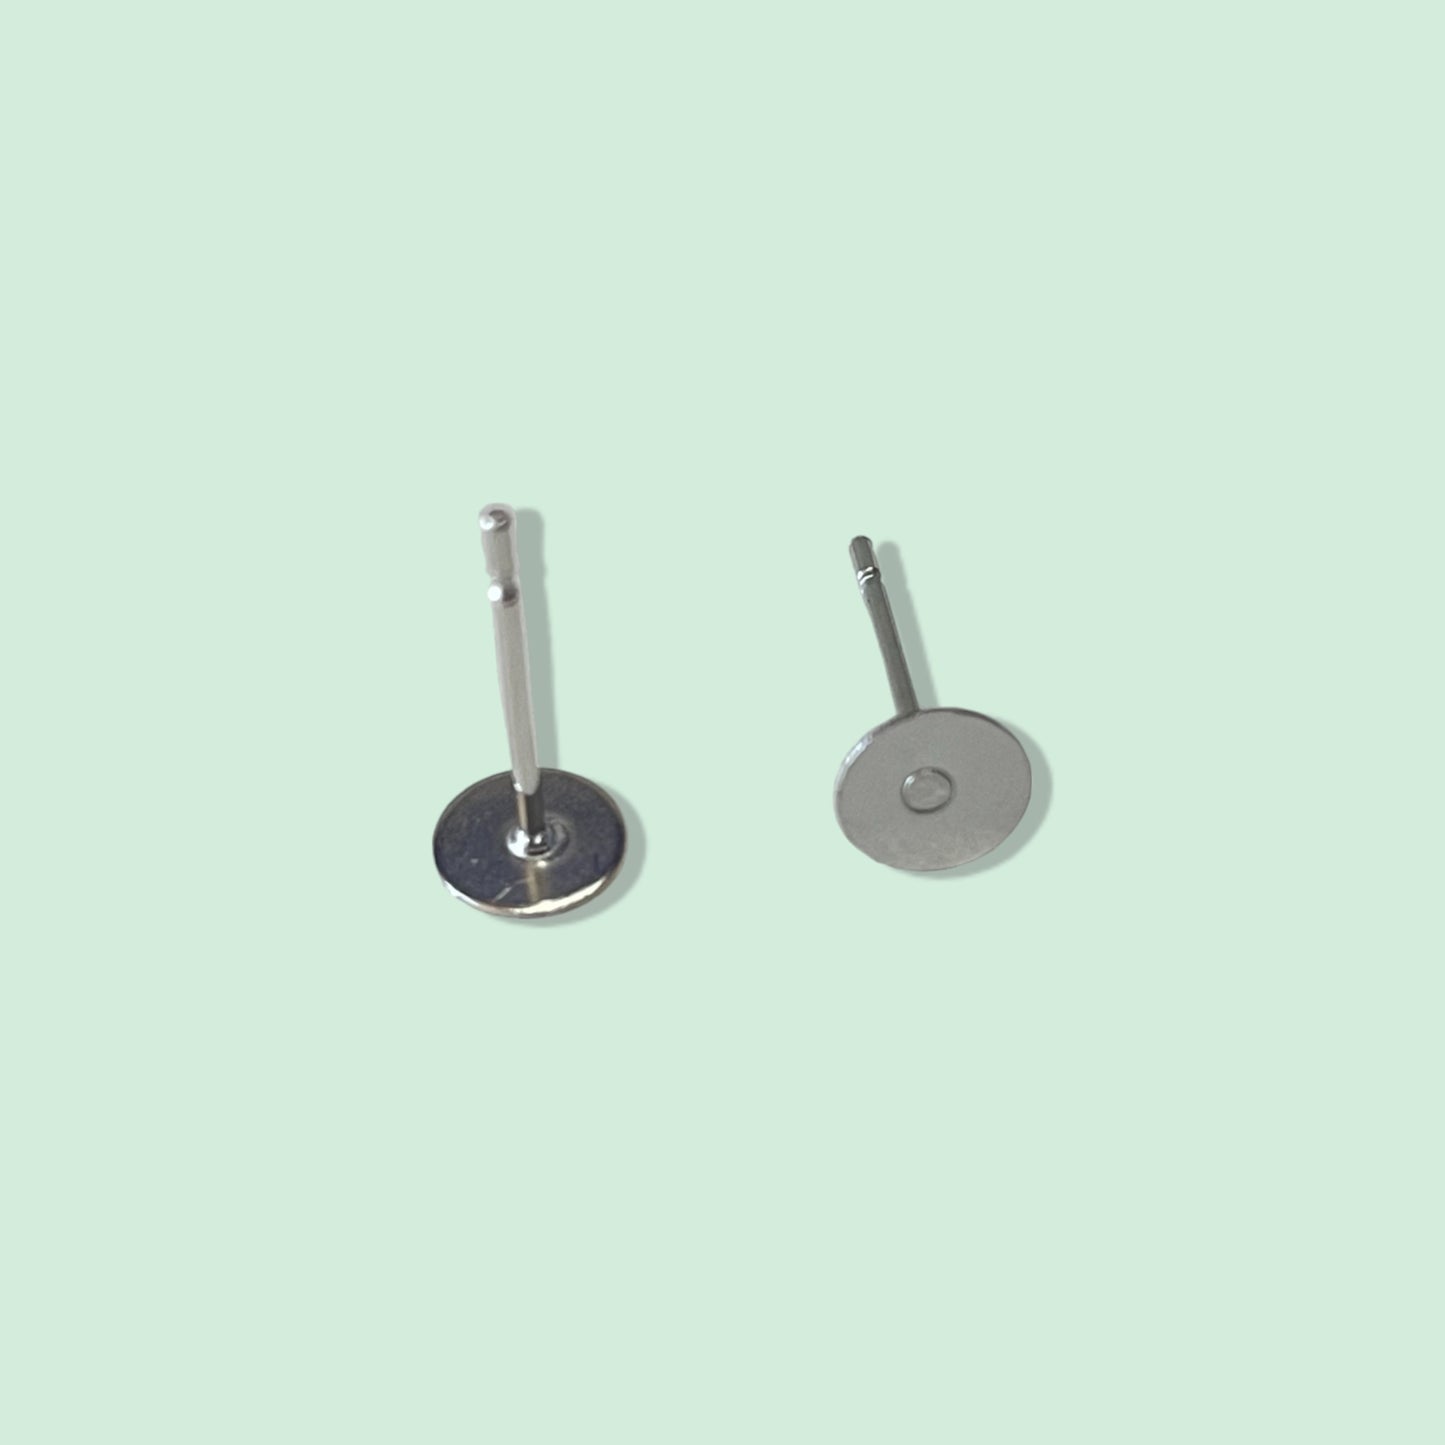 304 Stainless Steel Earring Posts - 5mm - including earring backs